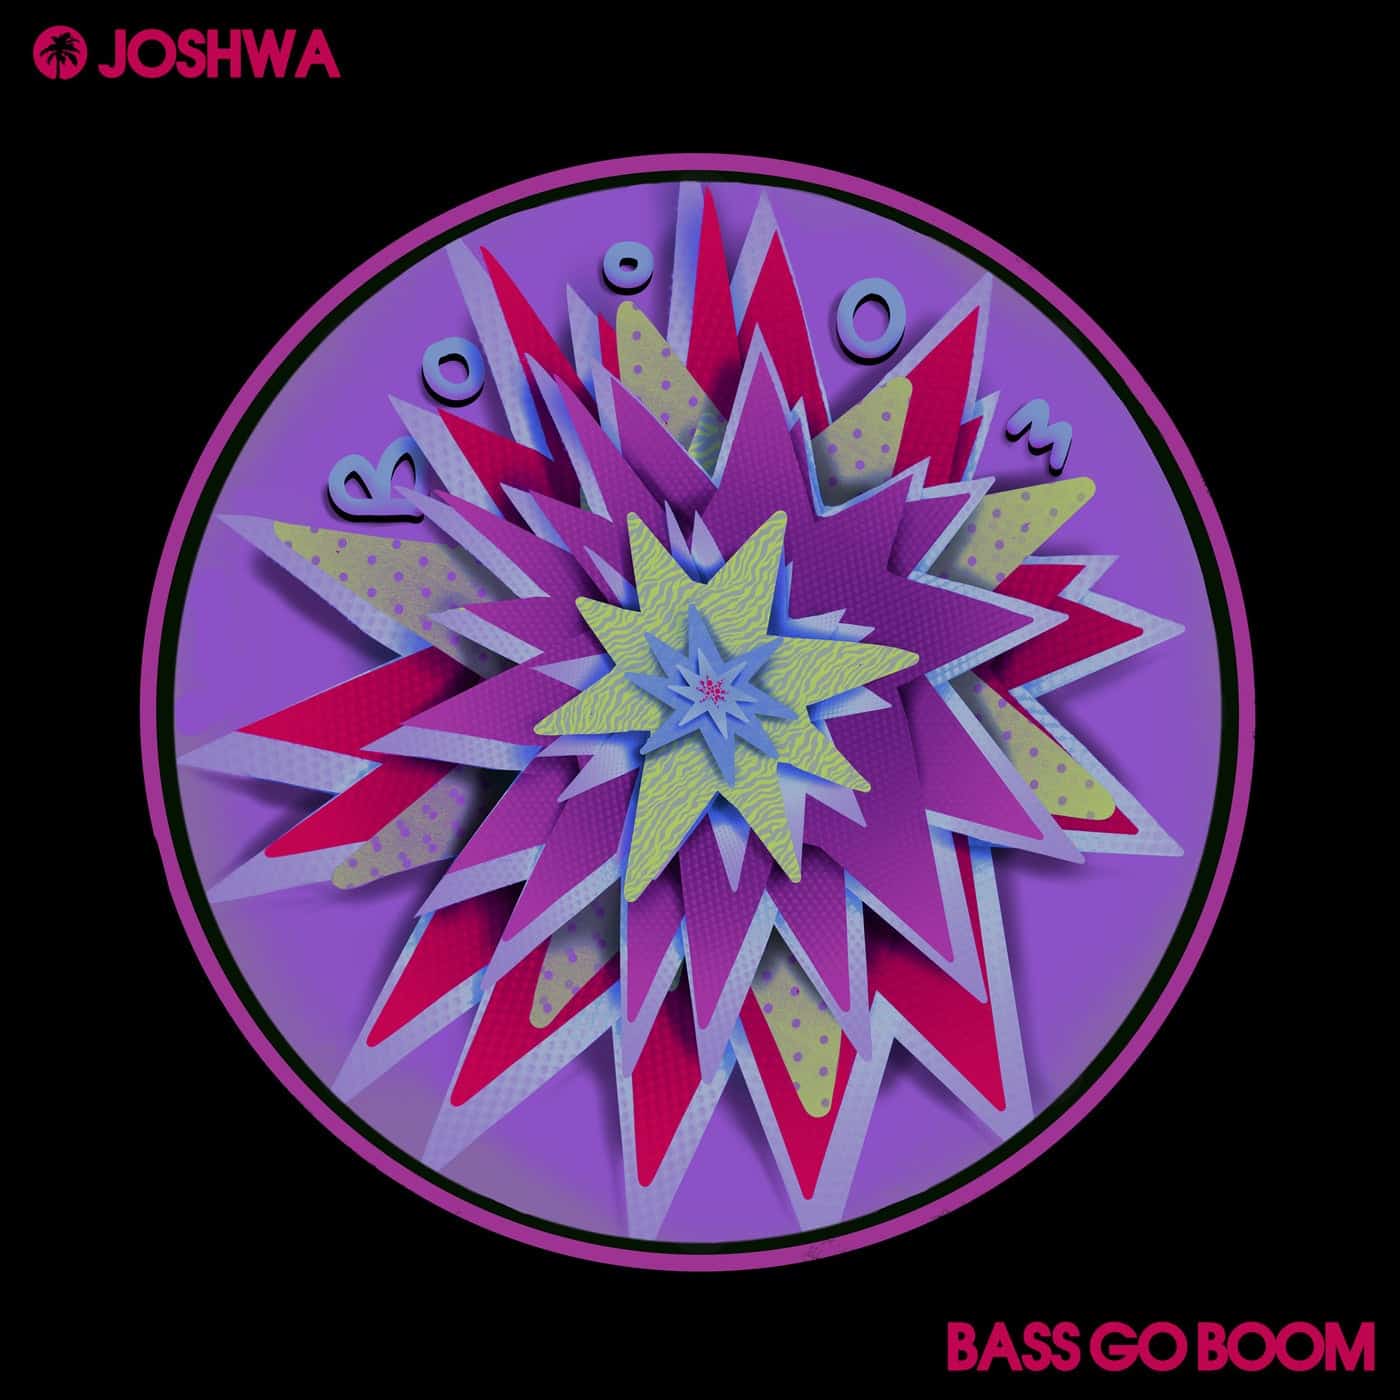 image cover: Joshwa - Bass Go Boom / HOTC207